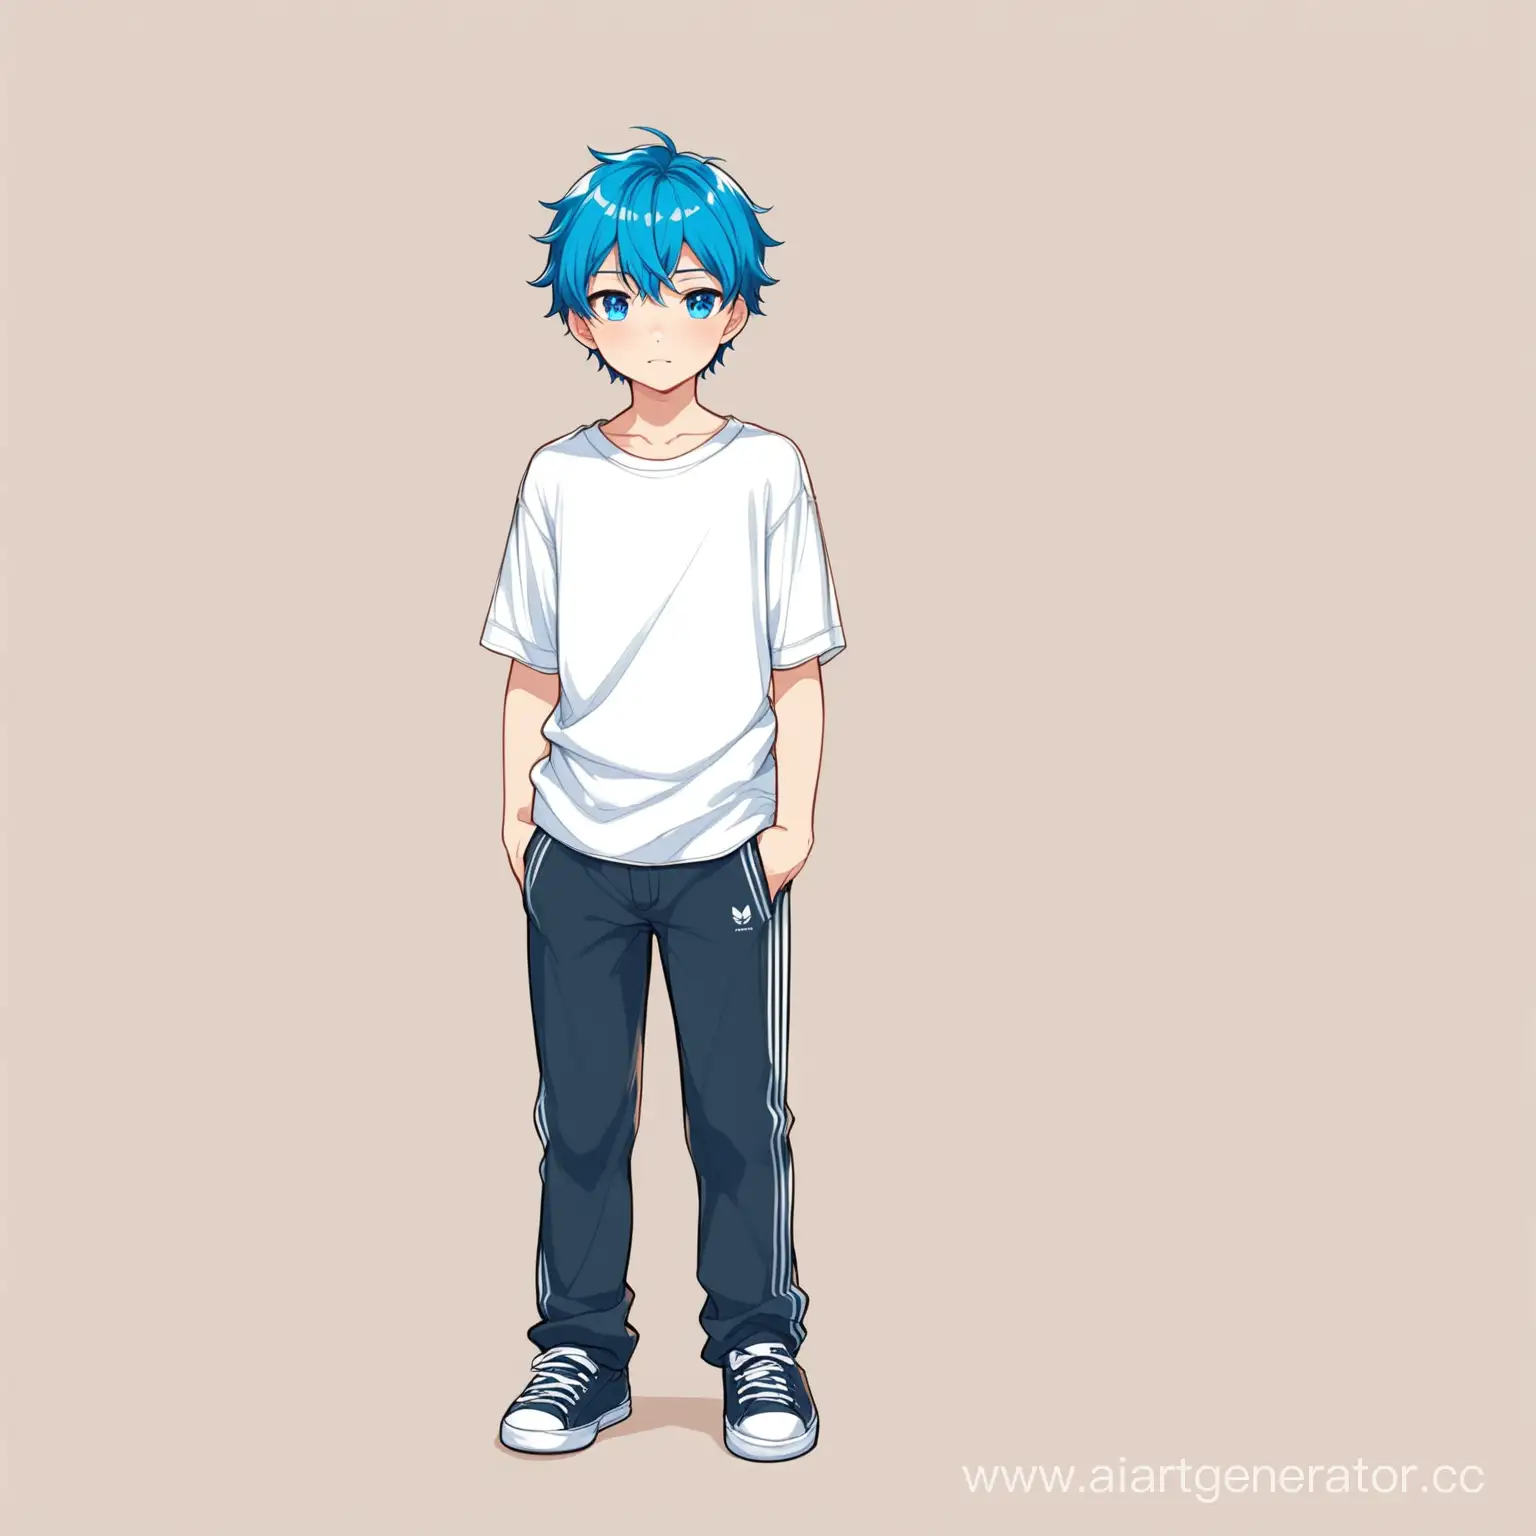 Stylish-Teenage-Boy-with-Blue-Hair-Eyes-and-Casual-Attire